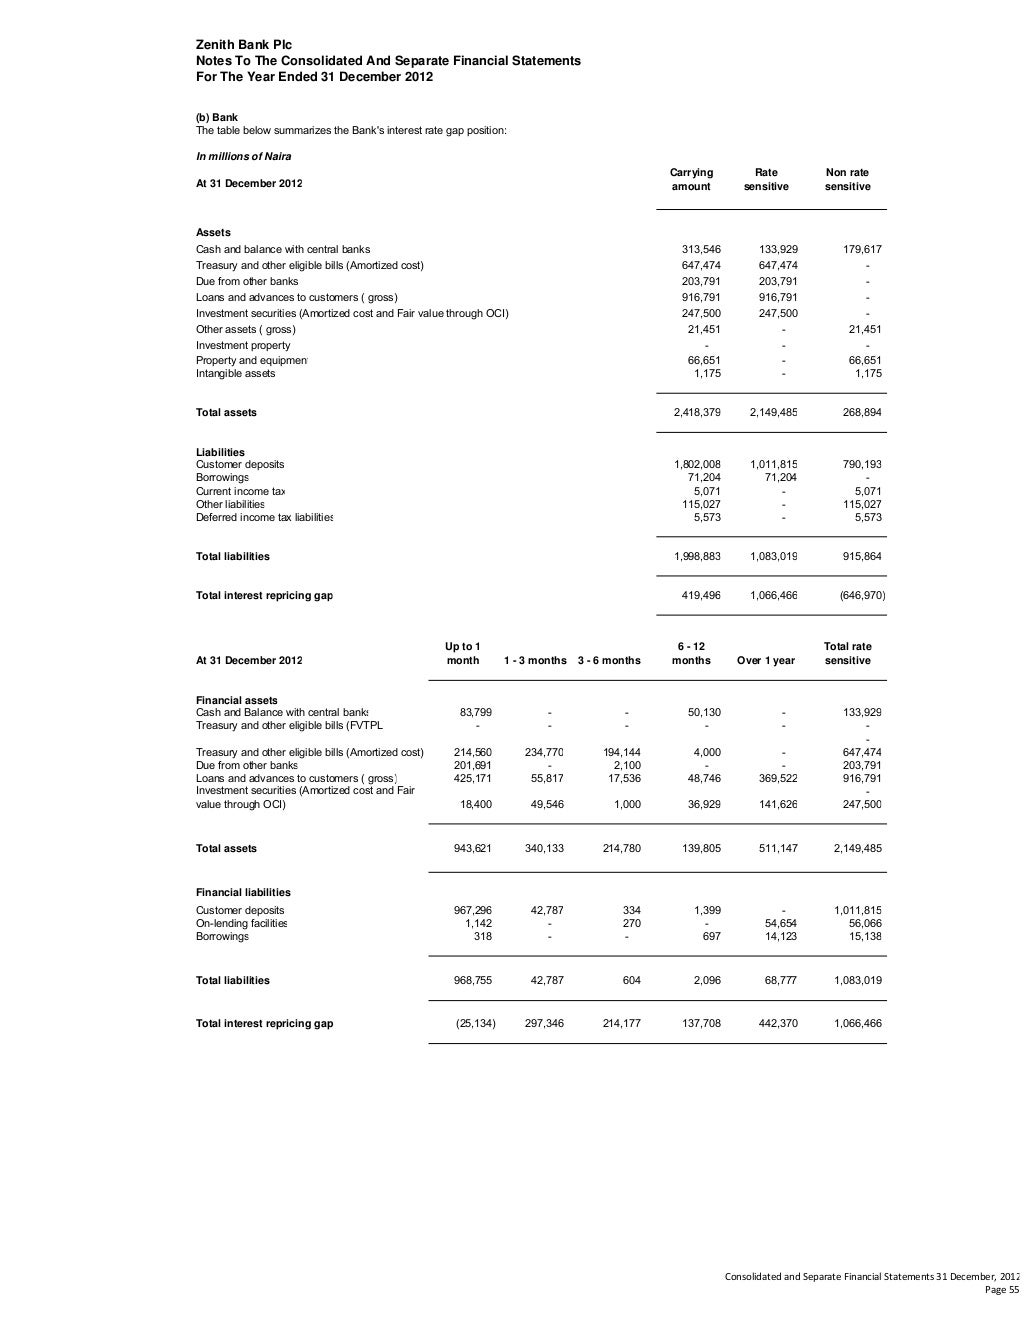 zenith-bank-annual-report-2012